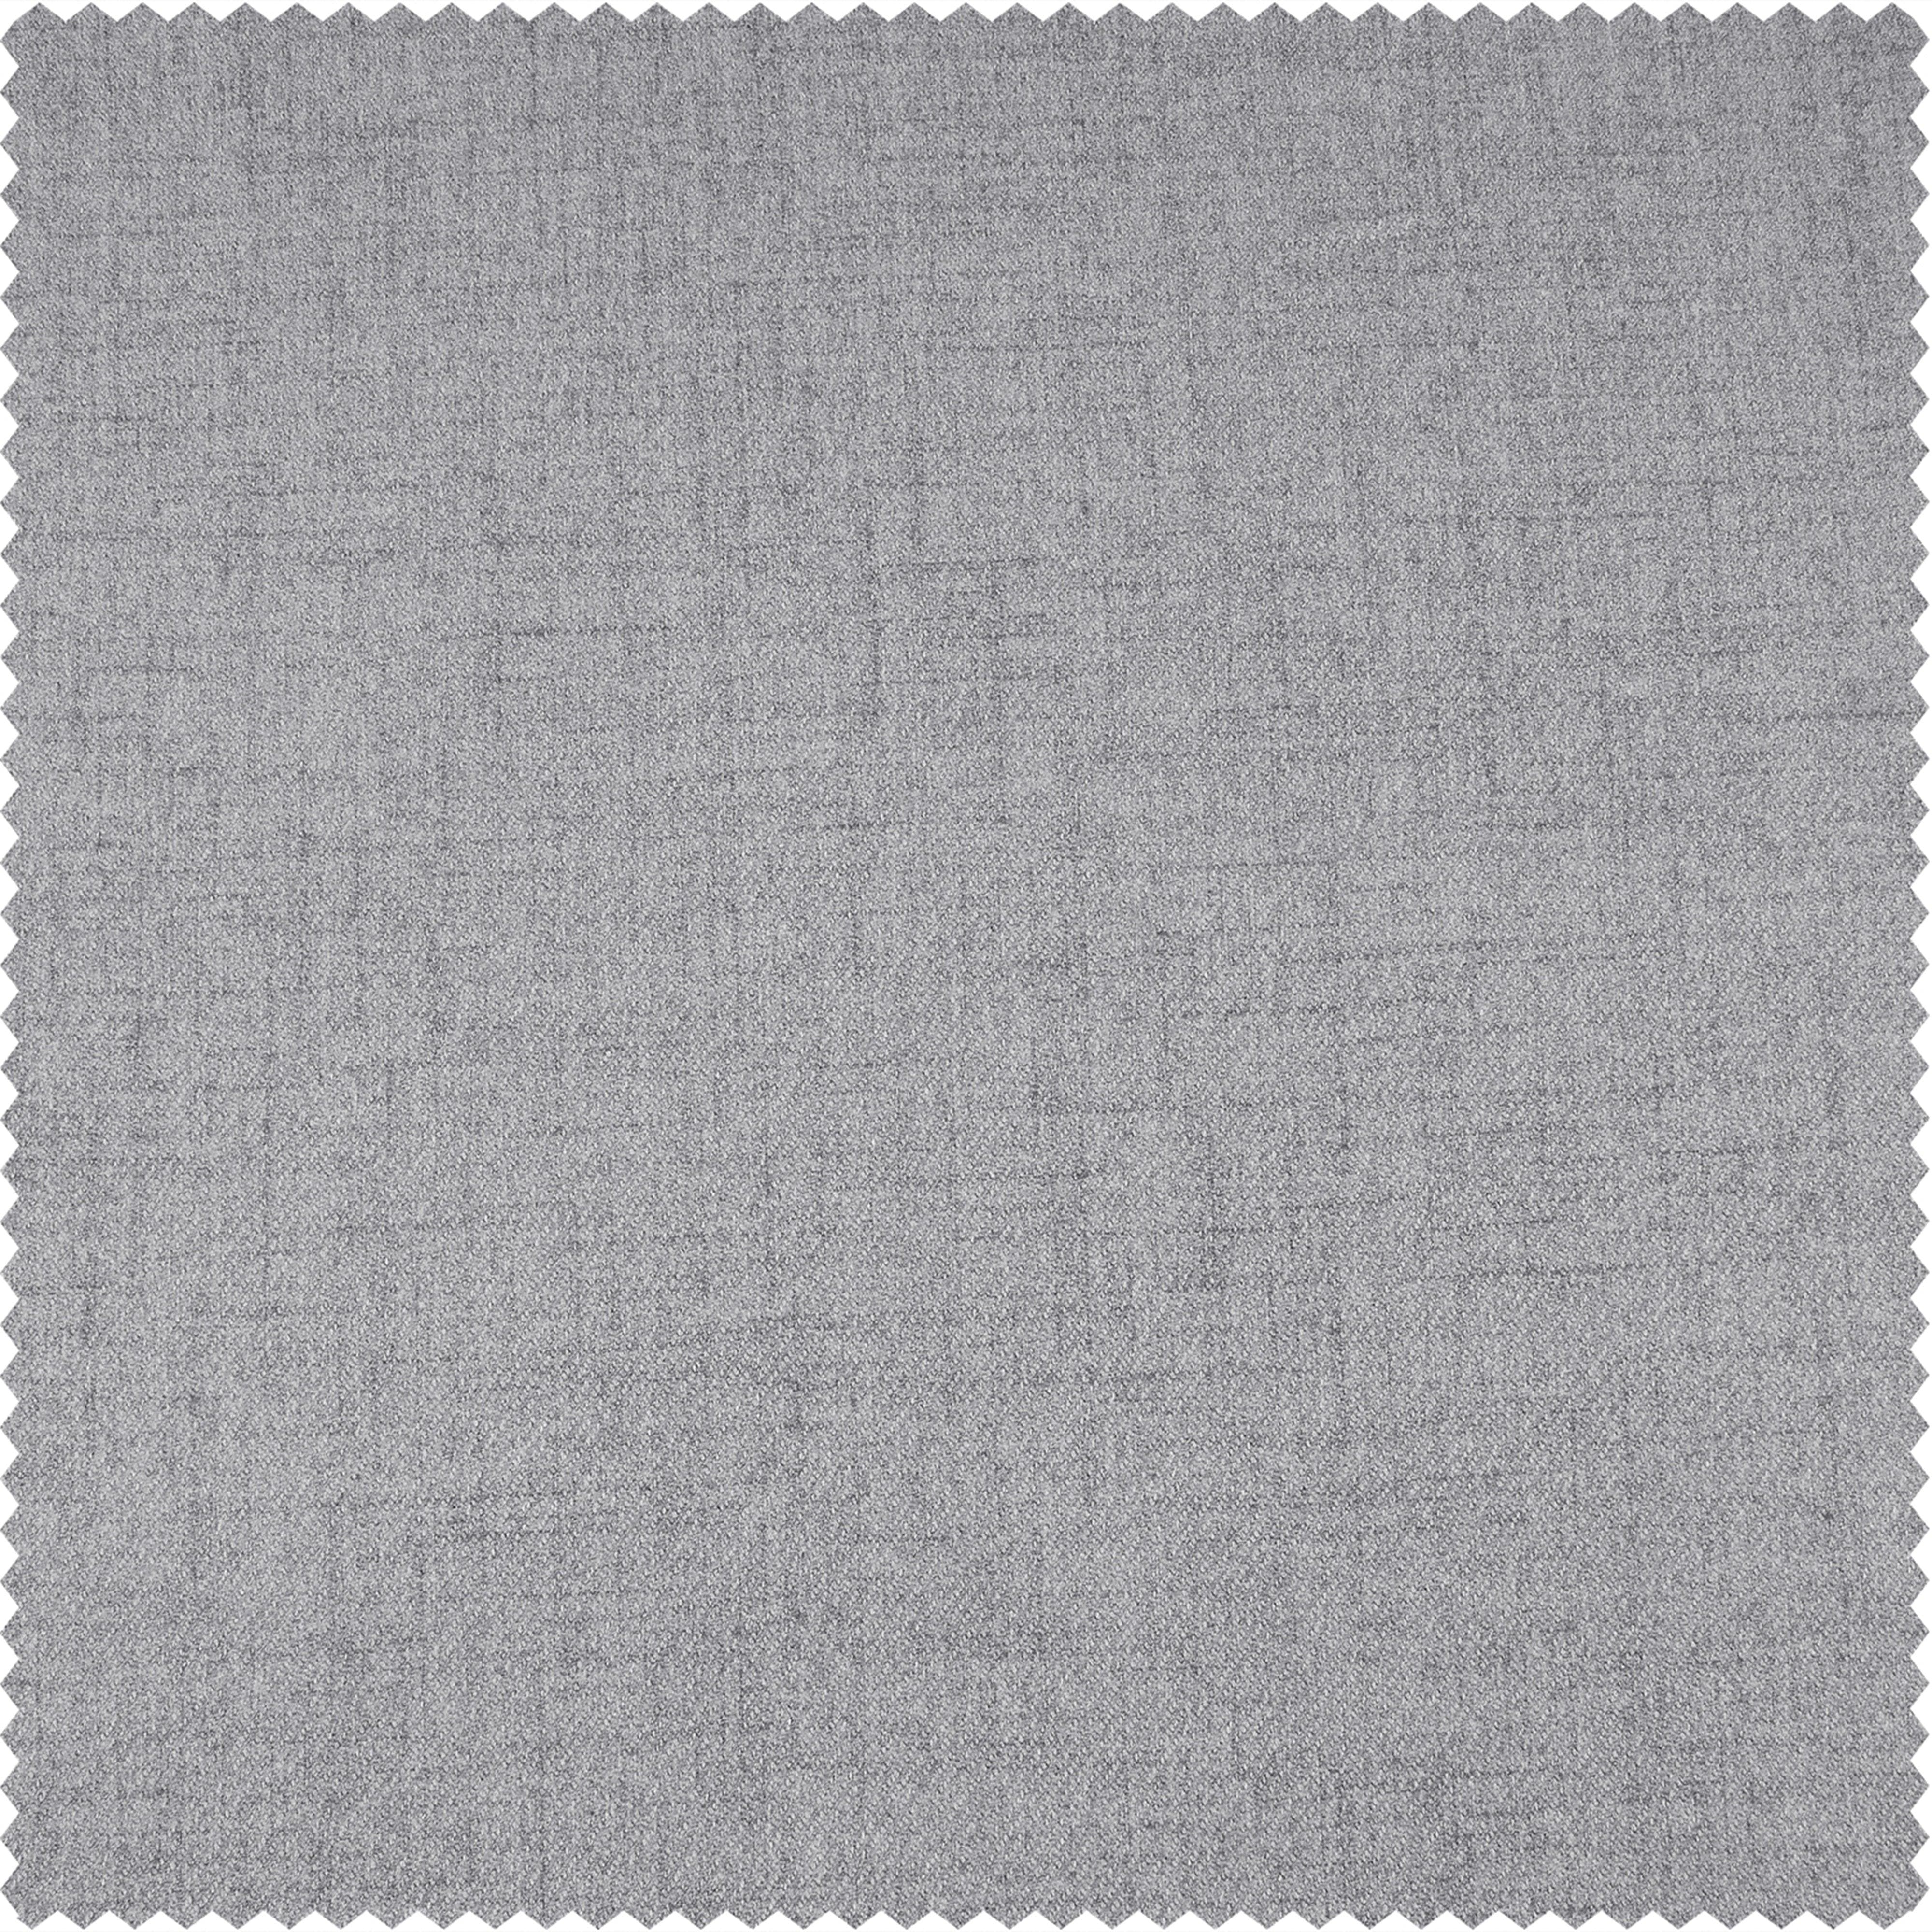 Steely Grey Grommet Heathered Woolen Weave Room Darkening Curtain